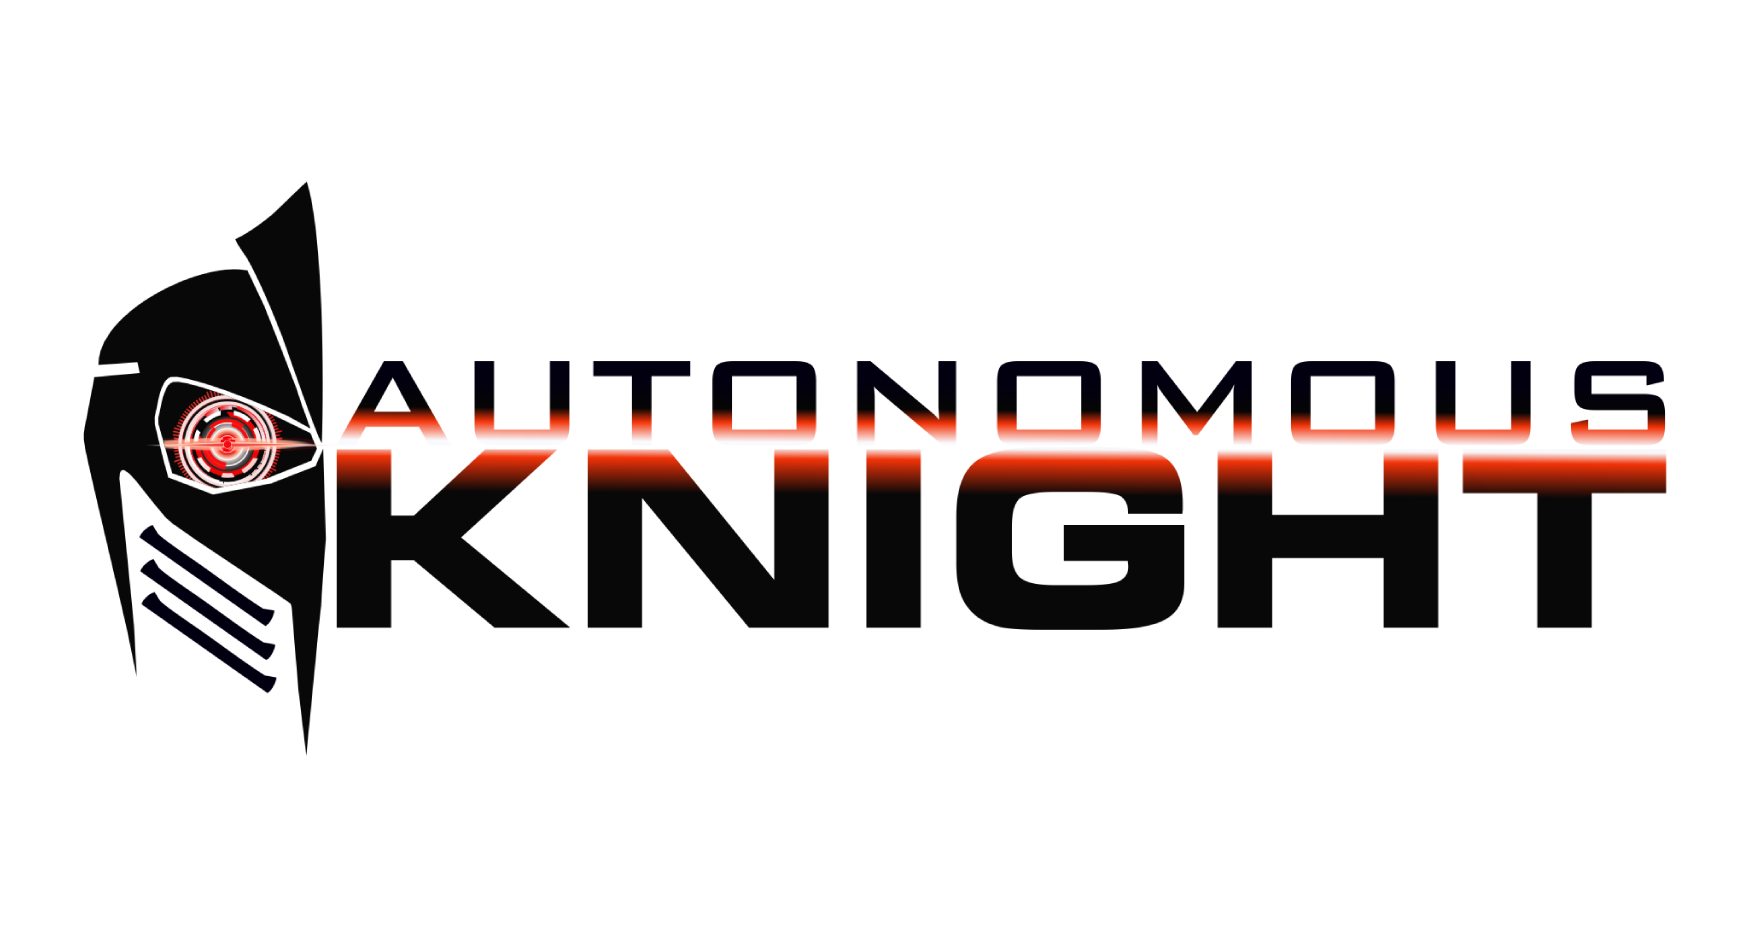 Netwerkpartner in de spotlight: Autonomous Knight